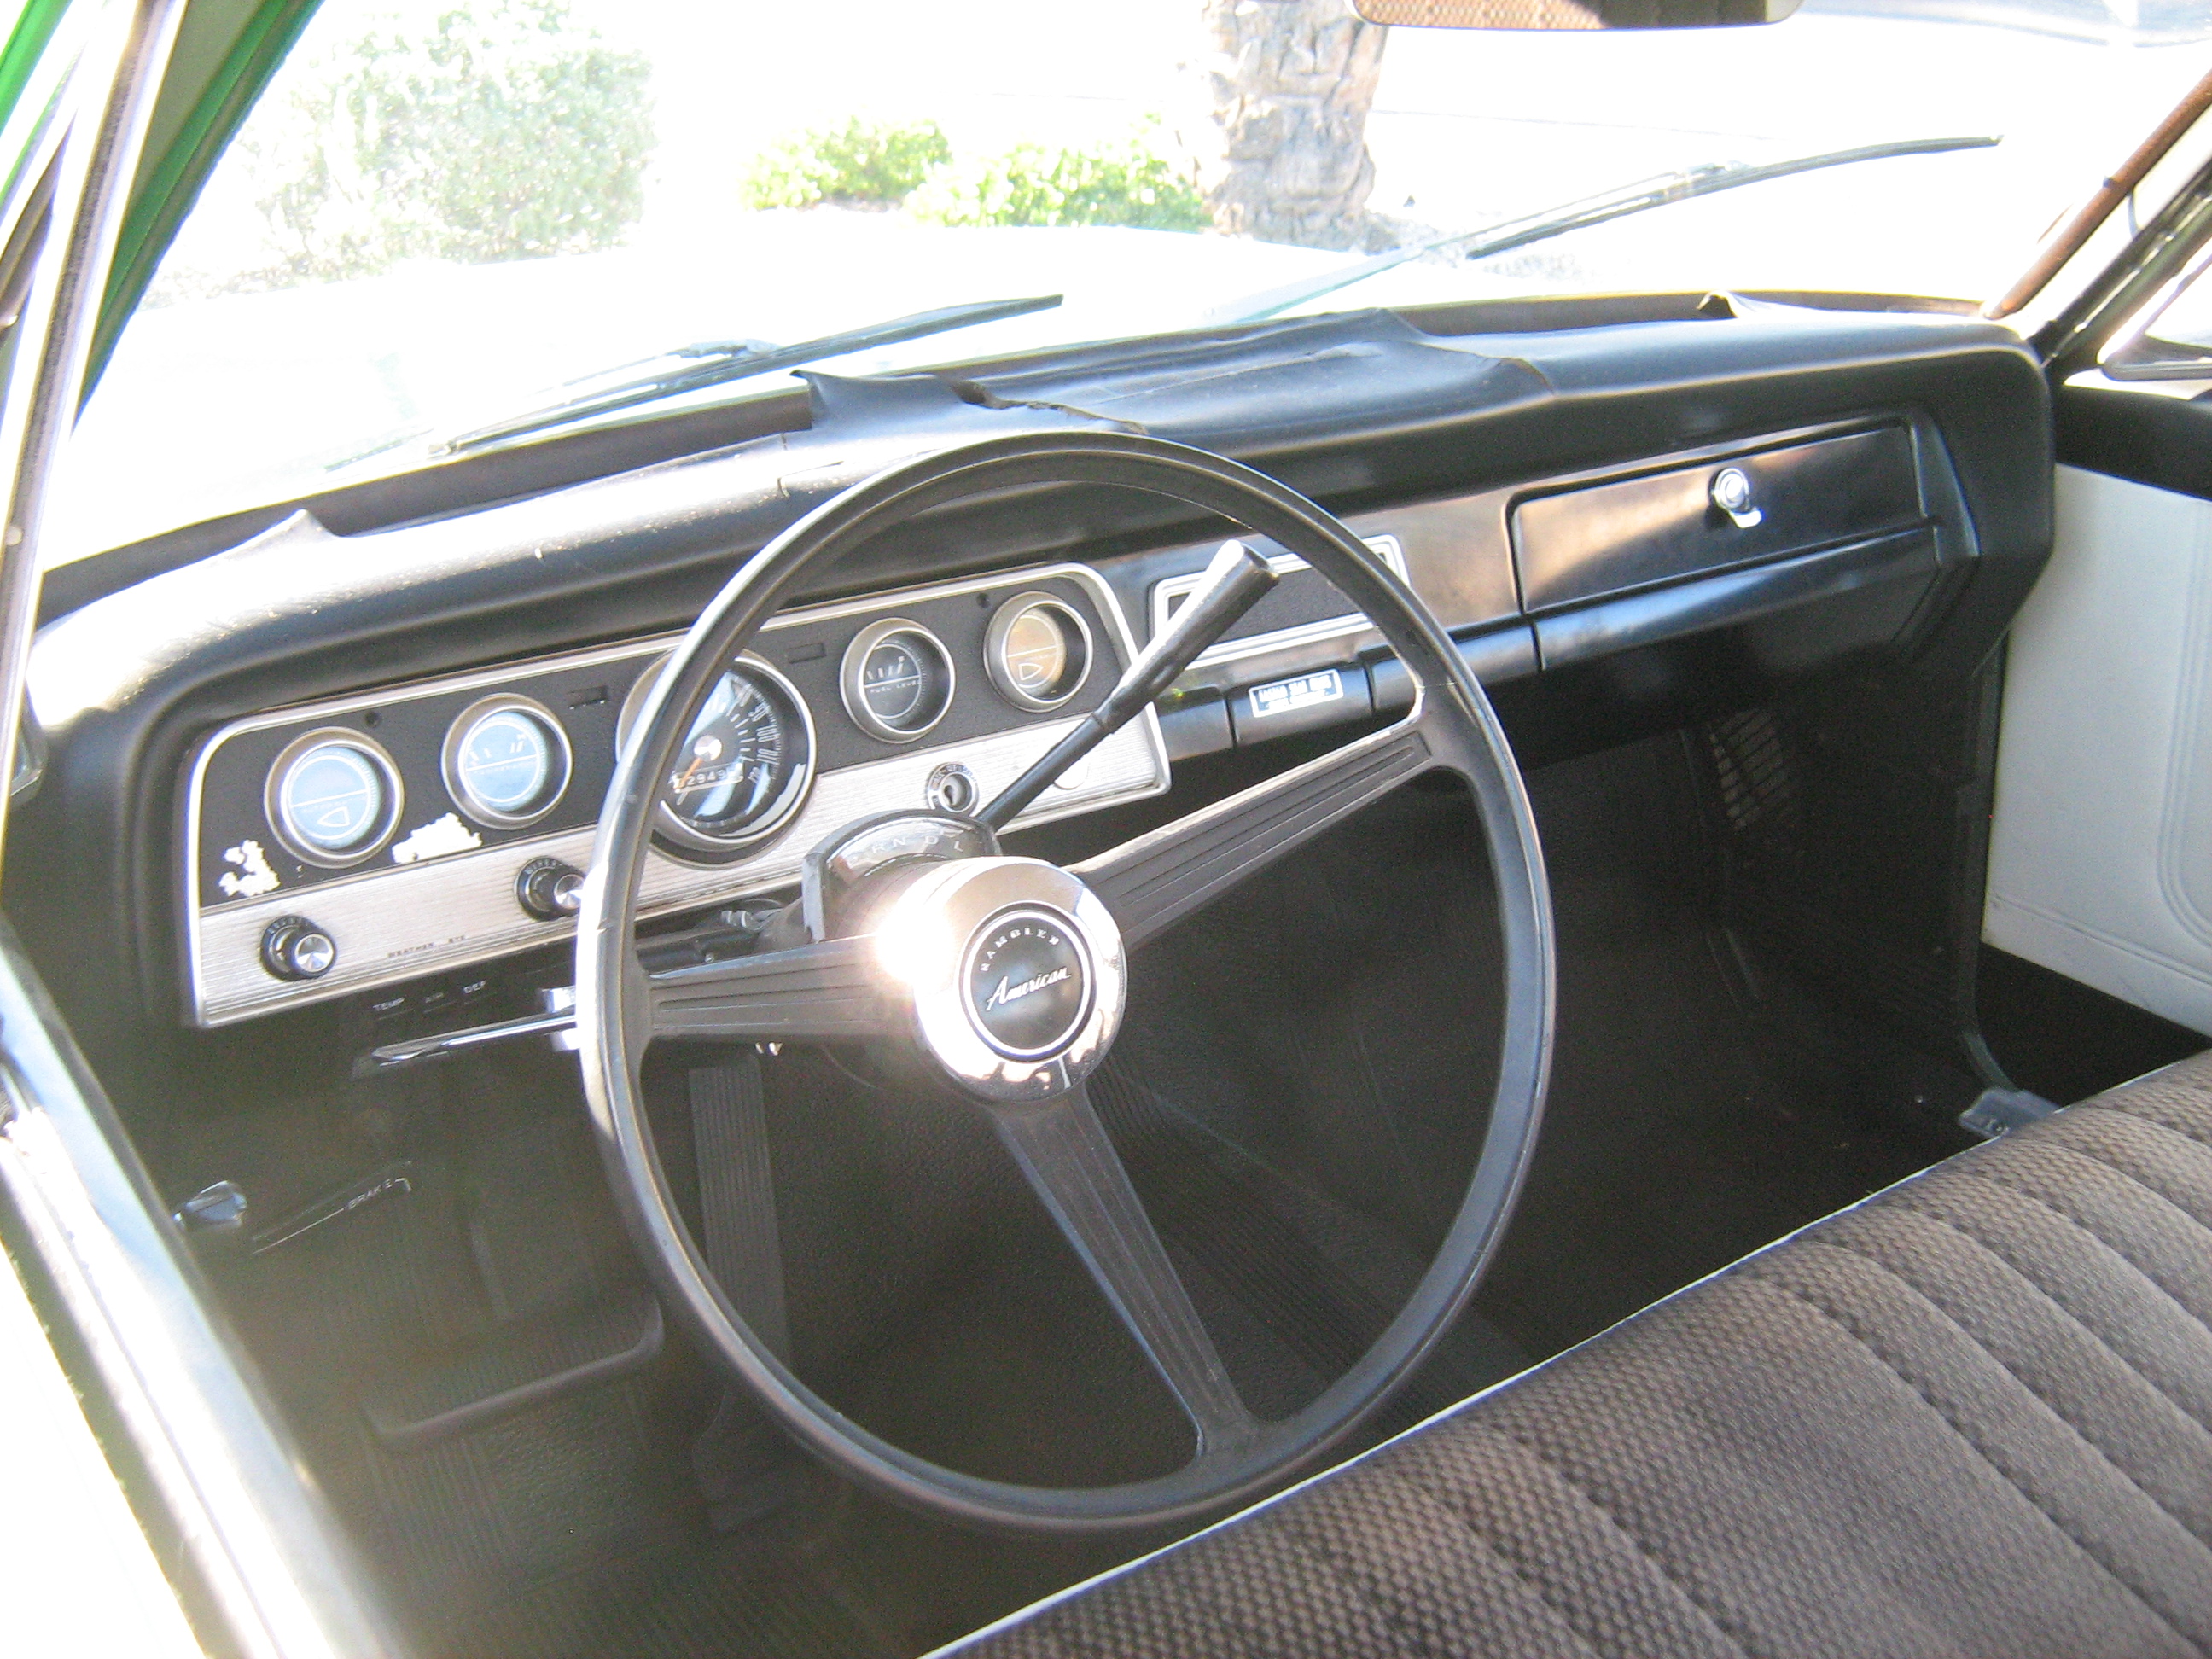 Dossier: 1967 Rambler American 2 portes 220 vert azi.jpg - Wikimédia...